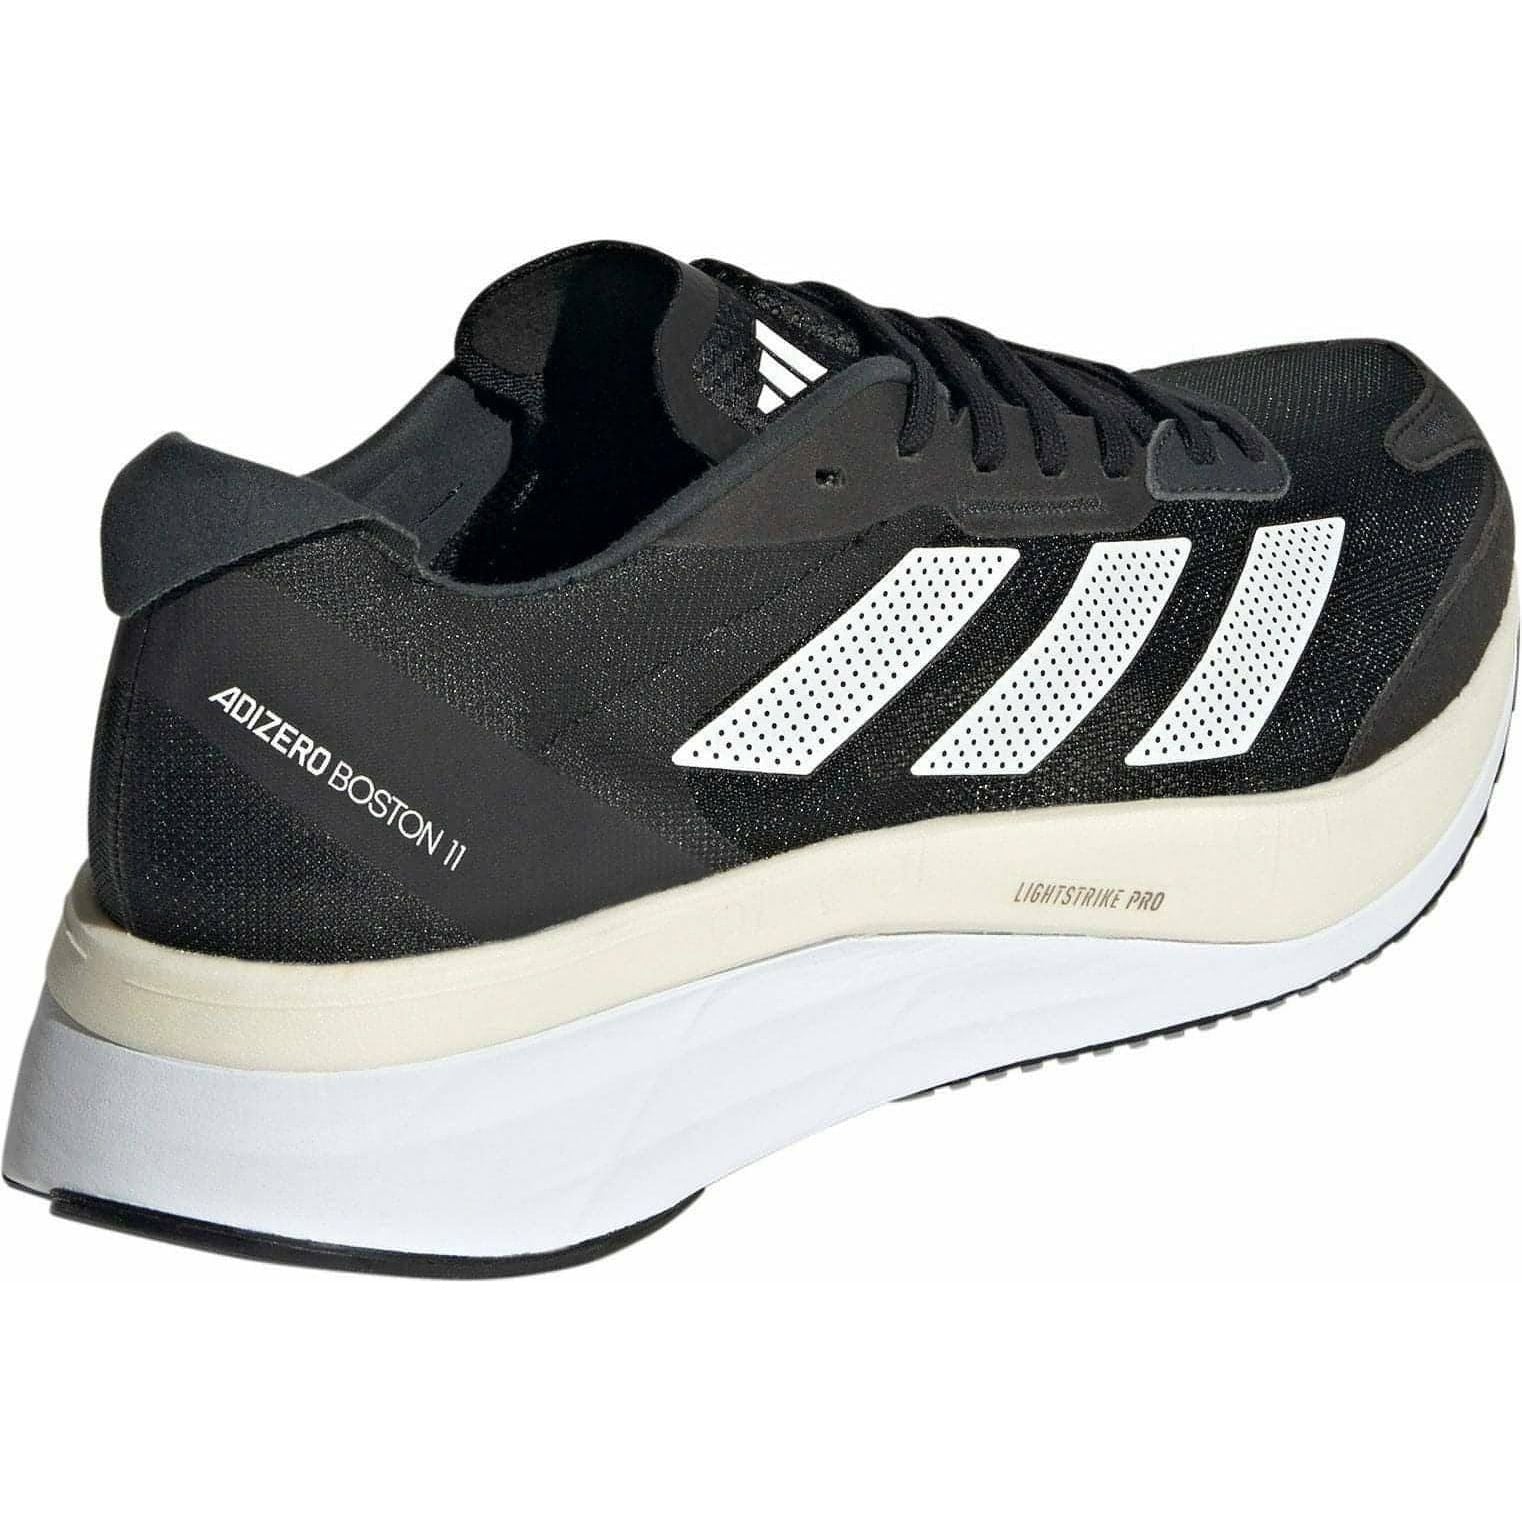 adidas Adizero Boston 11 Mens Running Shoes - Black - Start Fitness